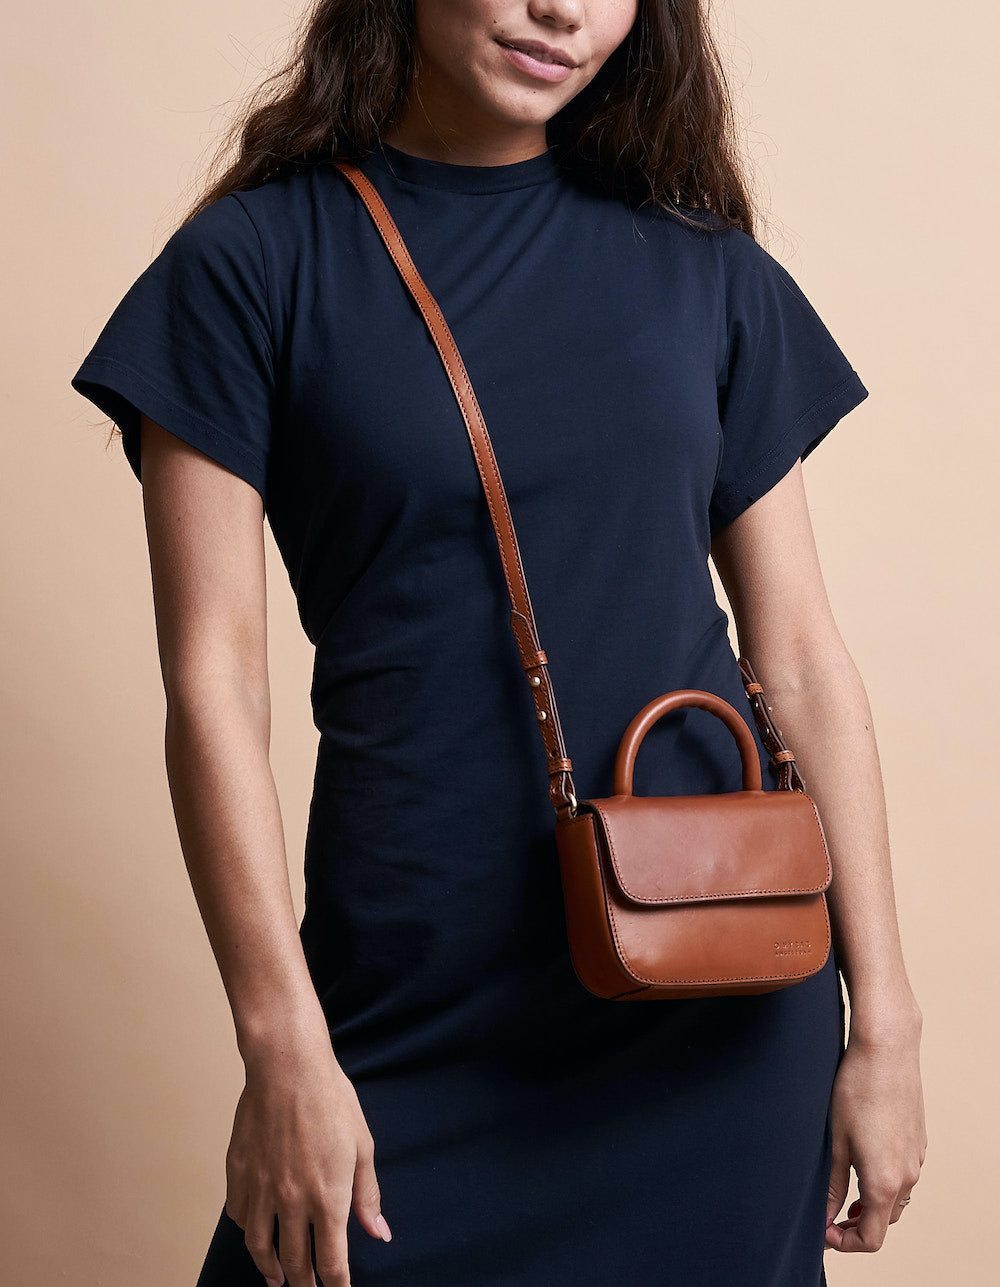 Nano Bag Cognac Classic Leather. Small clutch handbag, party bag. Model image.